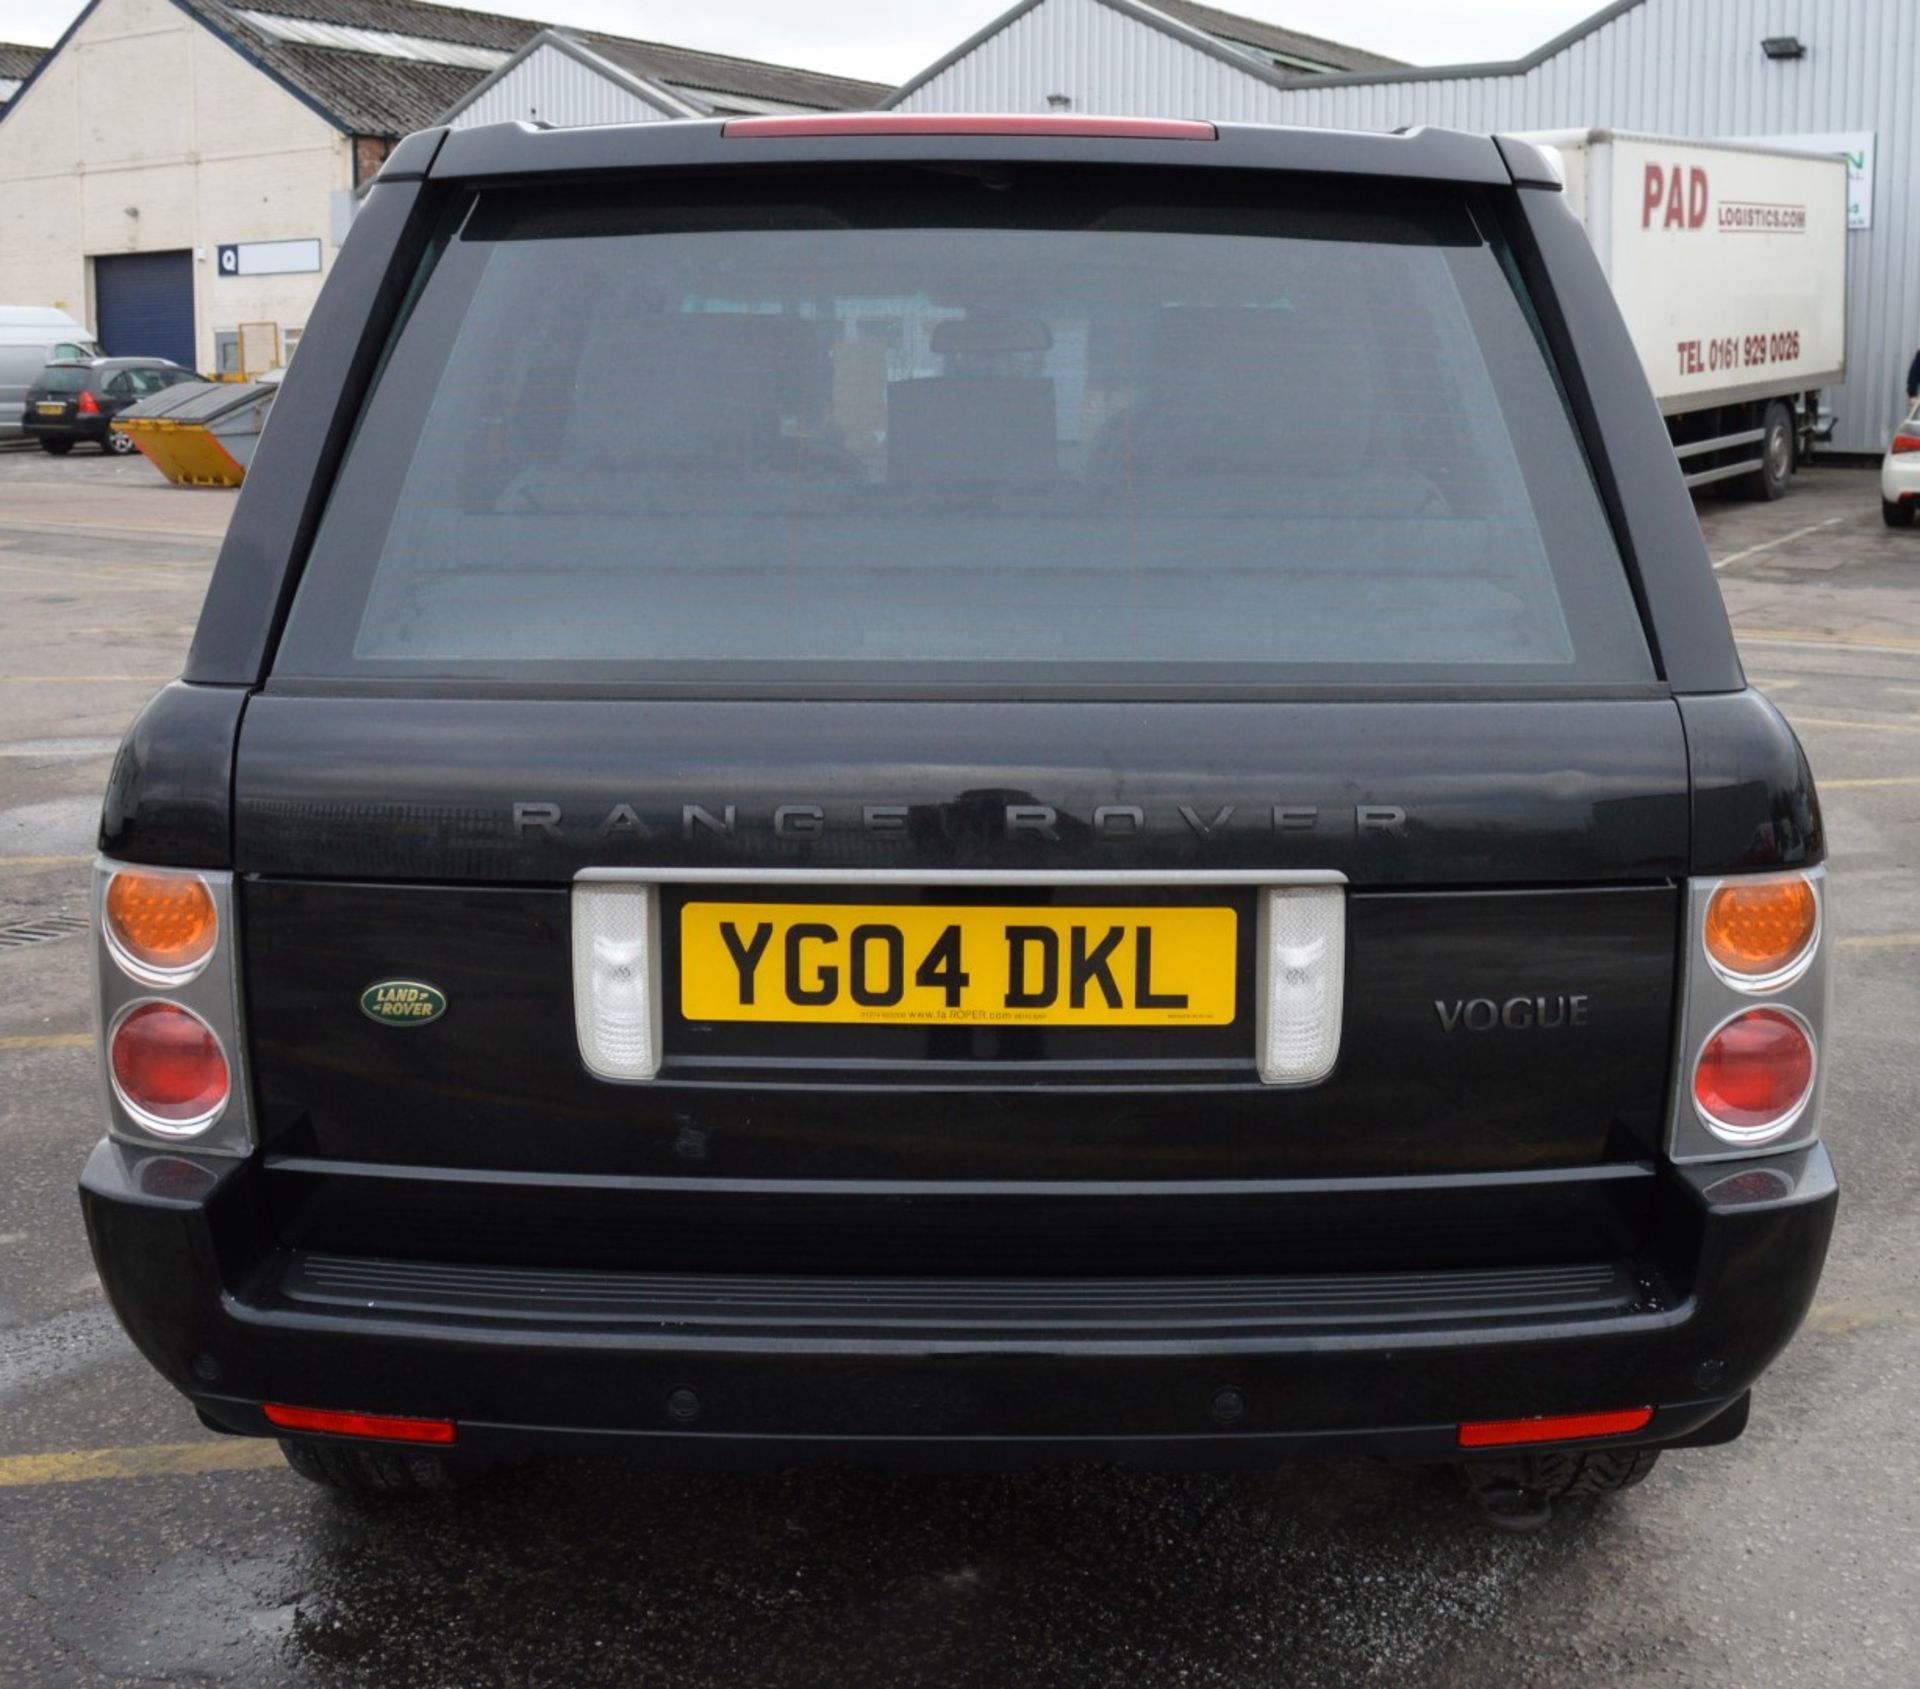 1 x Range Rover Vogue V8 4.4 Automatic - Black, Leather Interior, Petrol, Television, Premium - Image 31 of 63